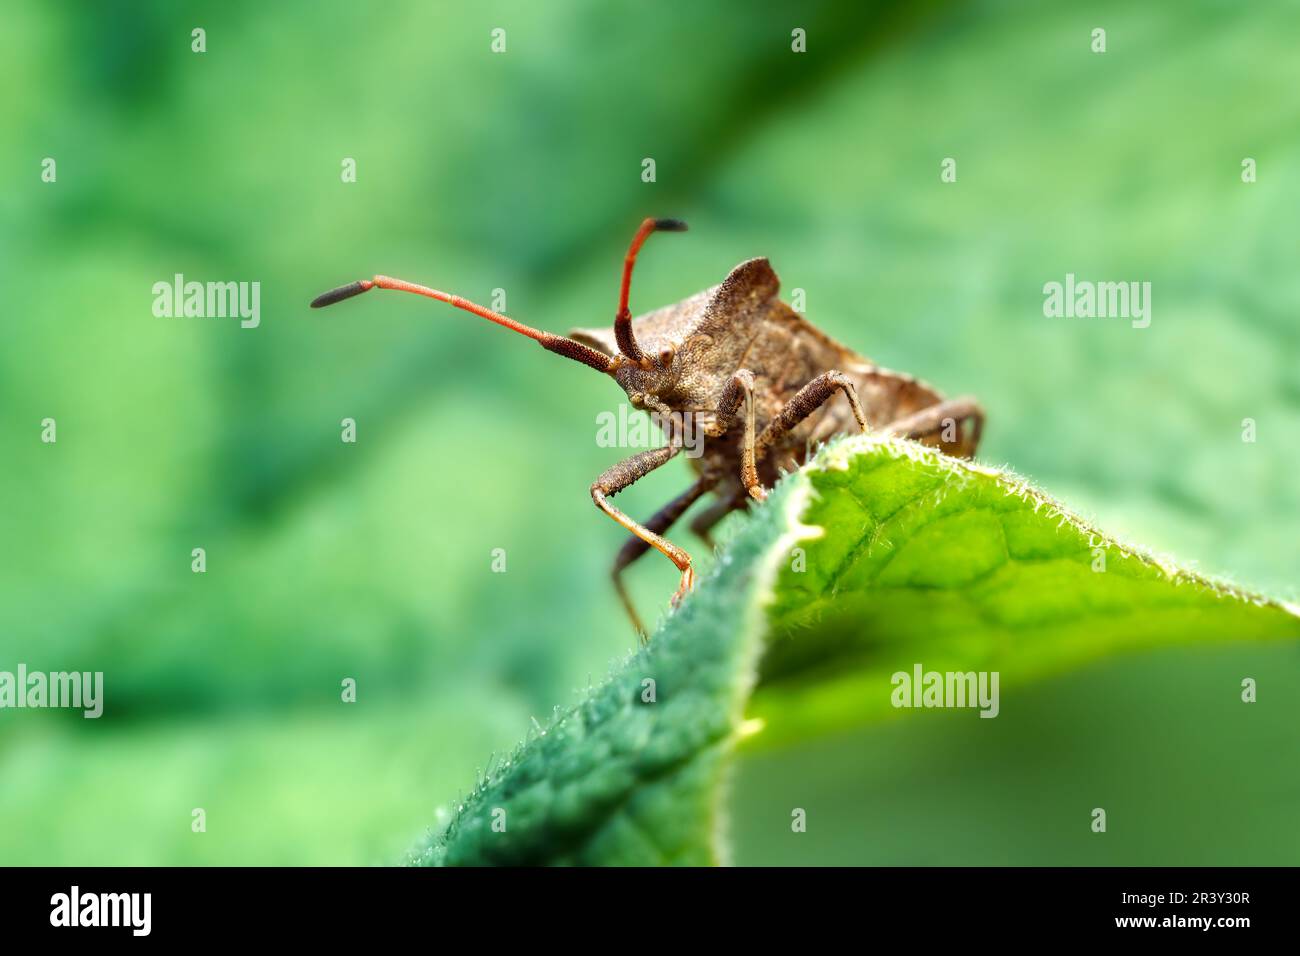 Dock bug (Coreus marginatus) looking over a green leaf Stock Photo